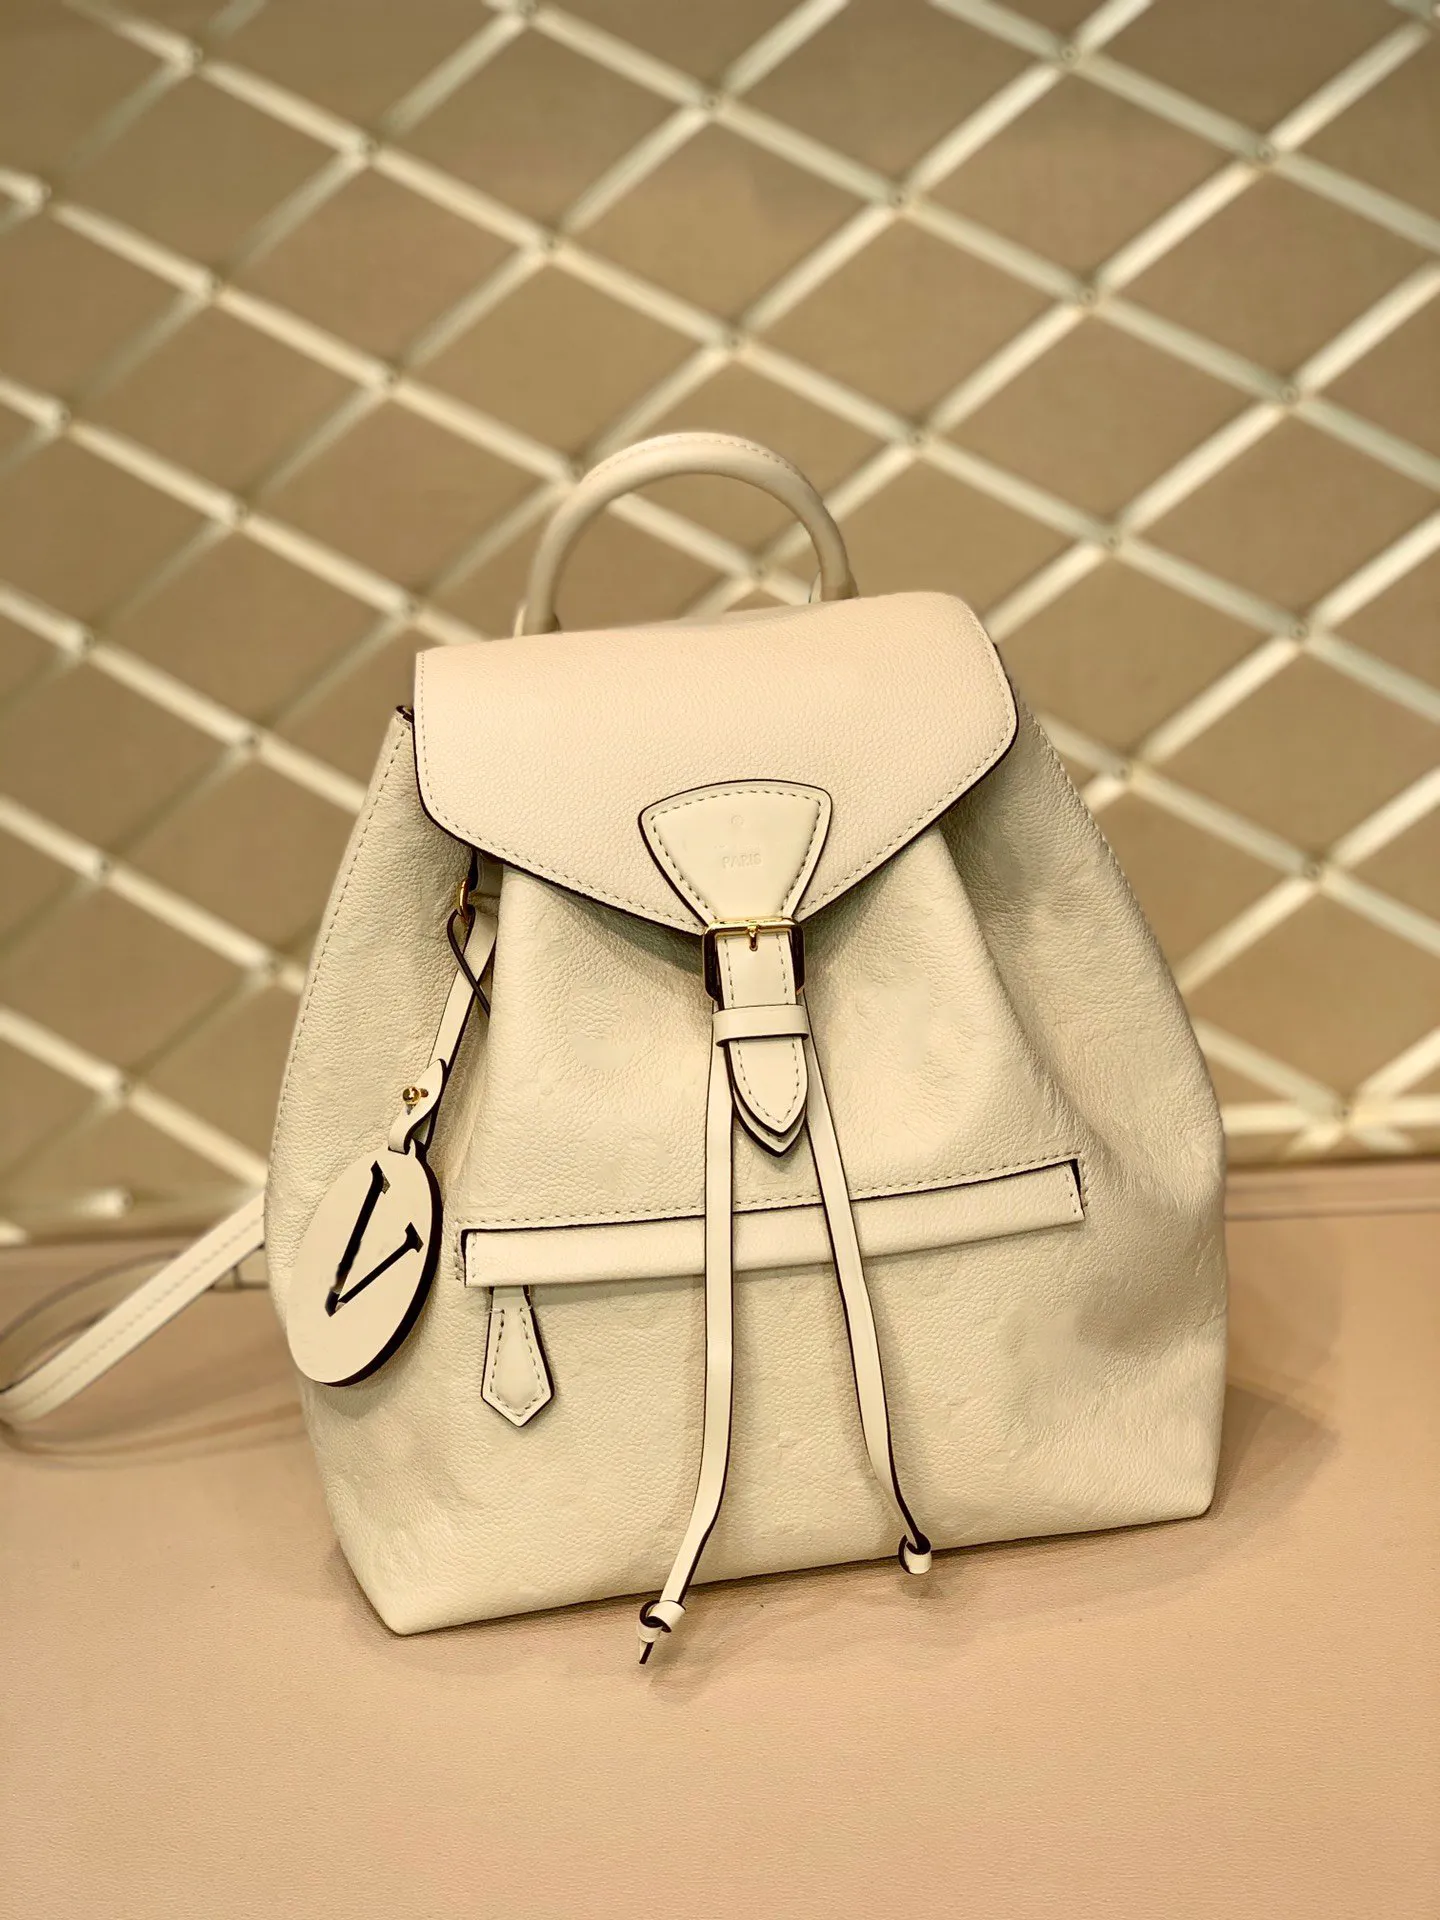 fashion BACKPACK WOMEN luxurys designers bags leather Handbag messenger crossbody shoulder bag Totes purse